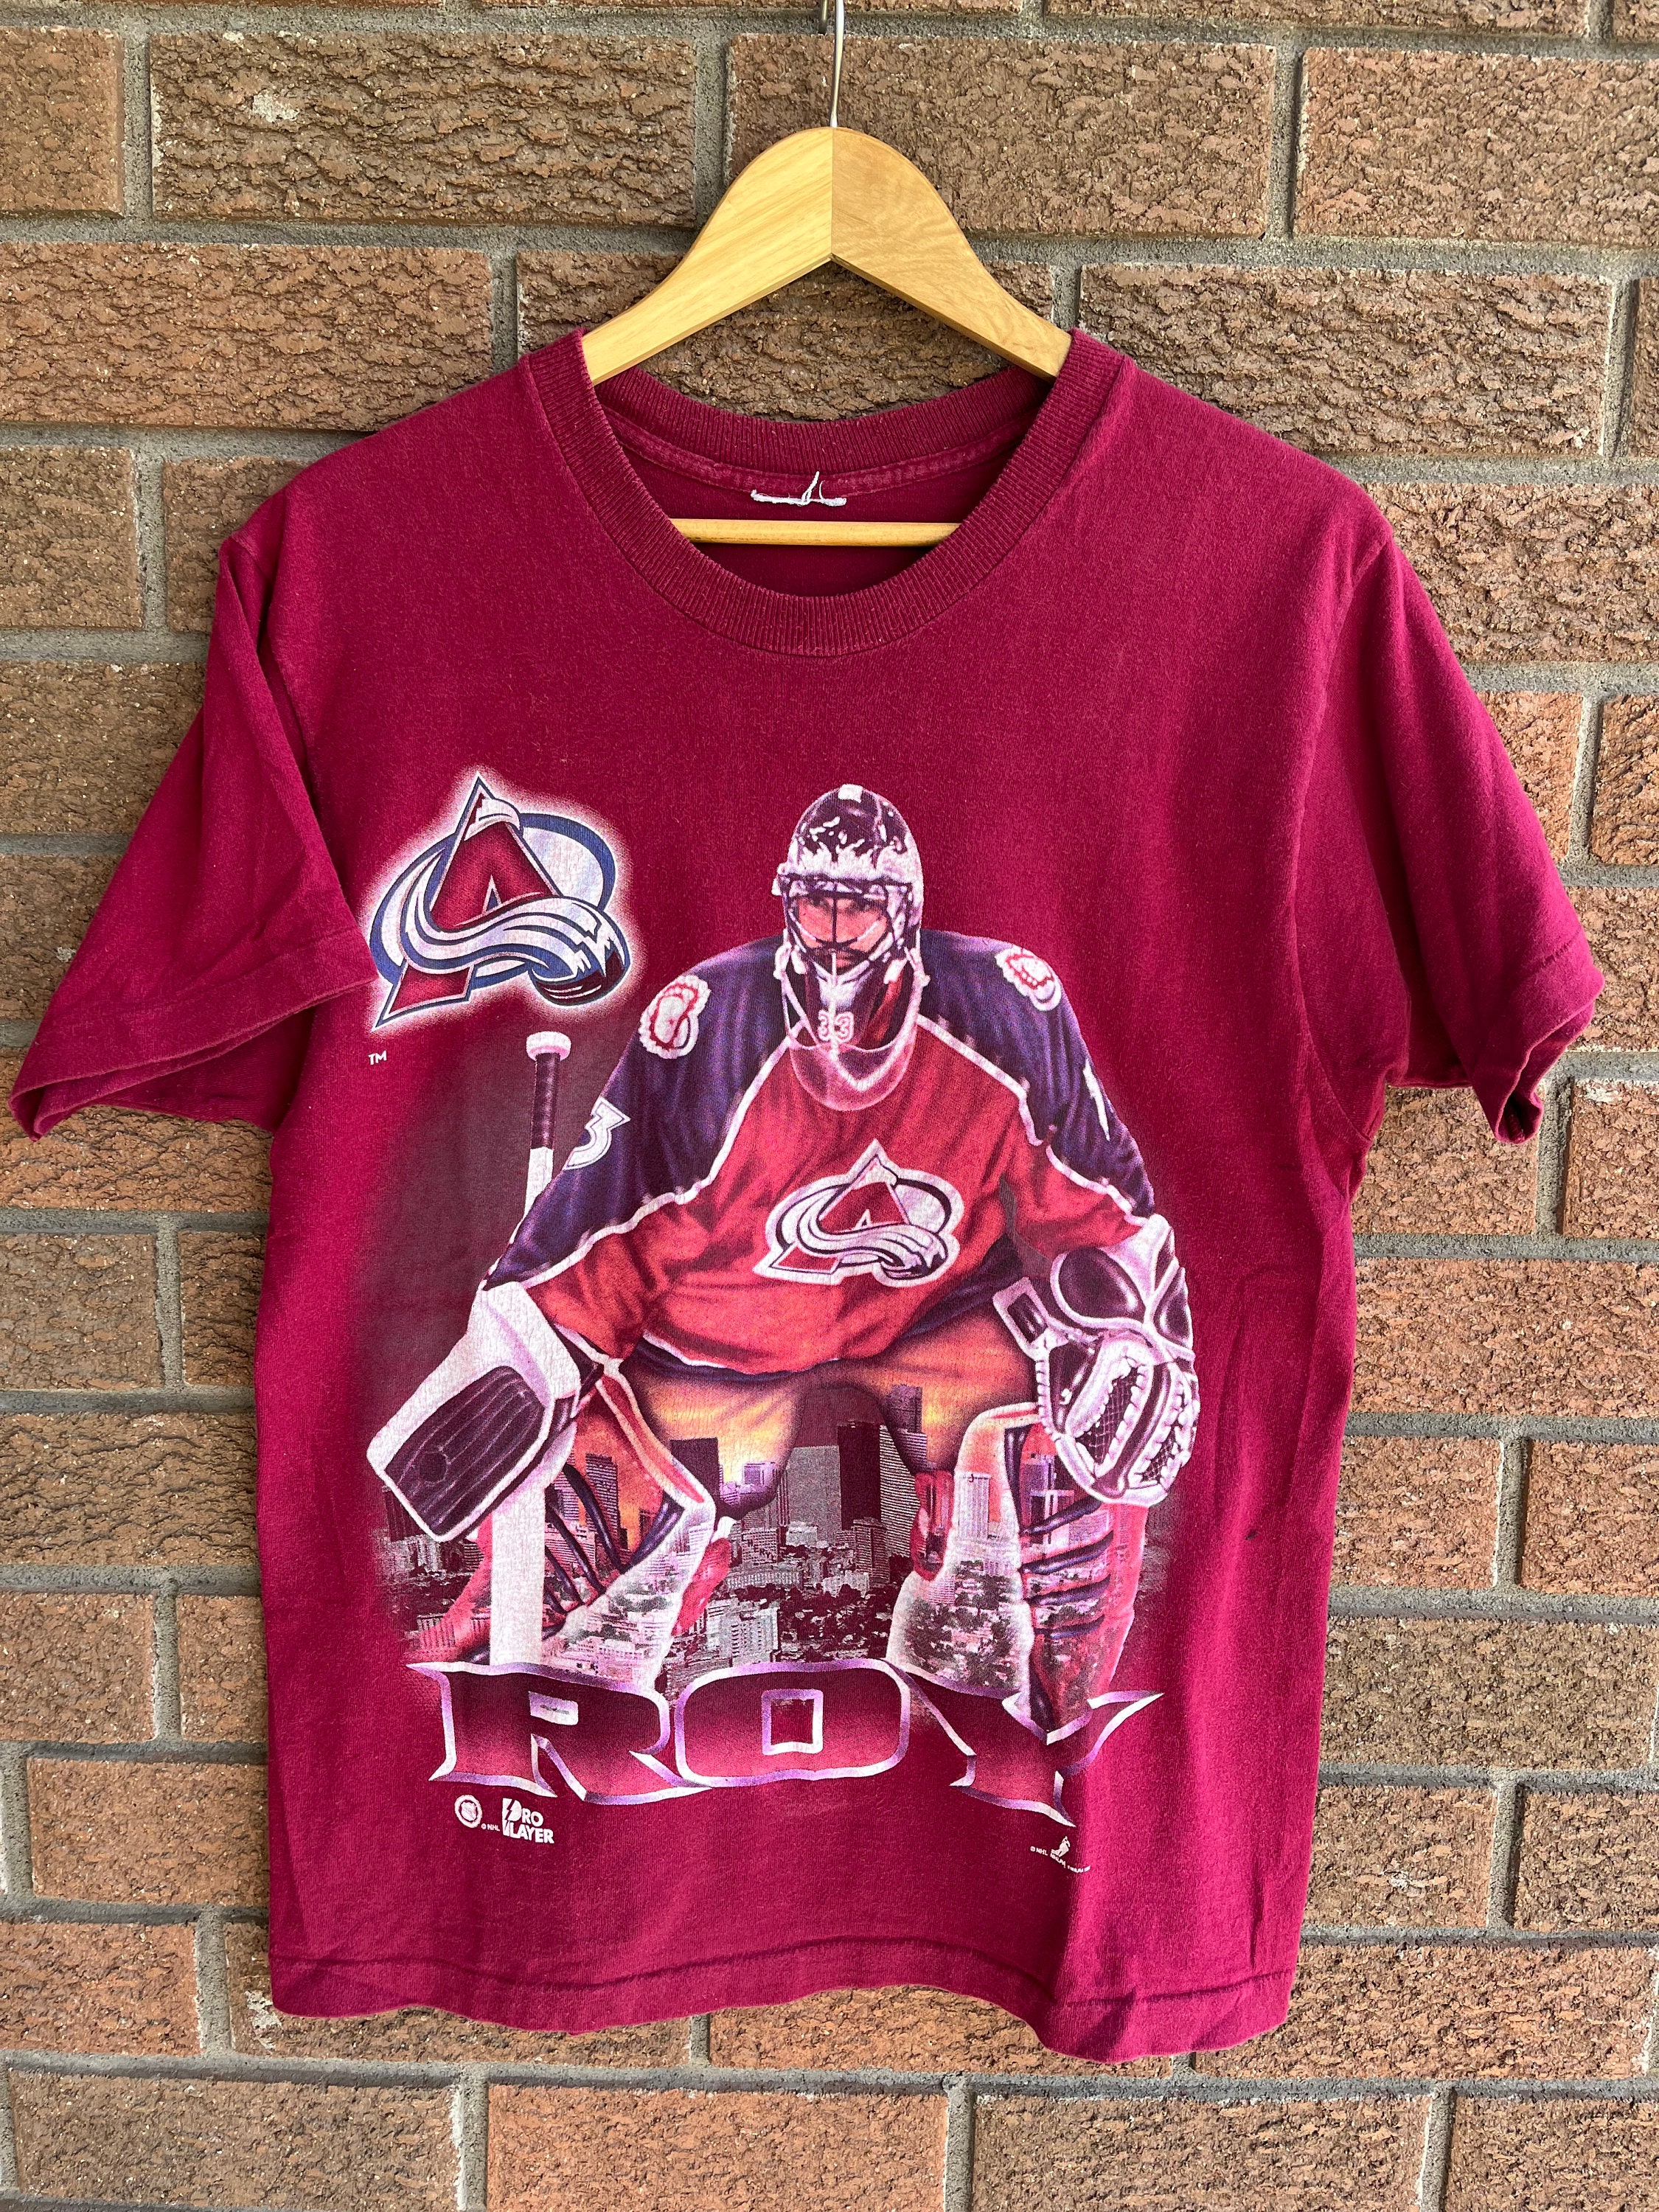 Patrick Roy Jerseys, Patrick Roy T-Shirts, Gear